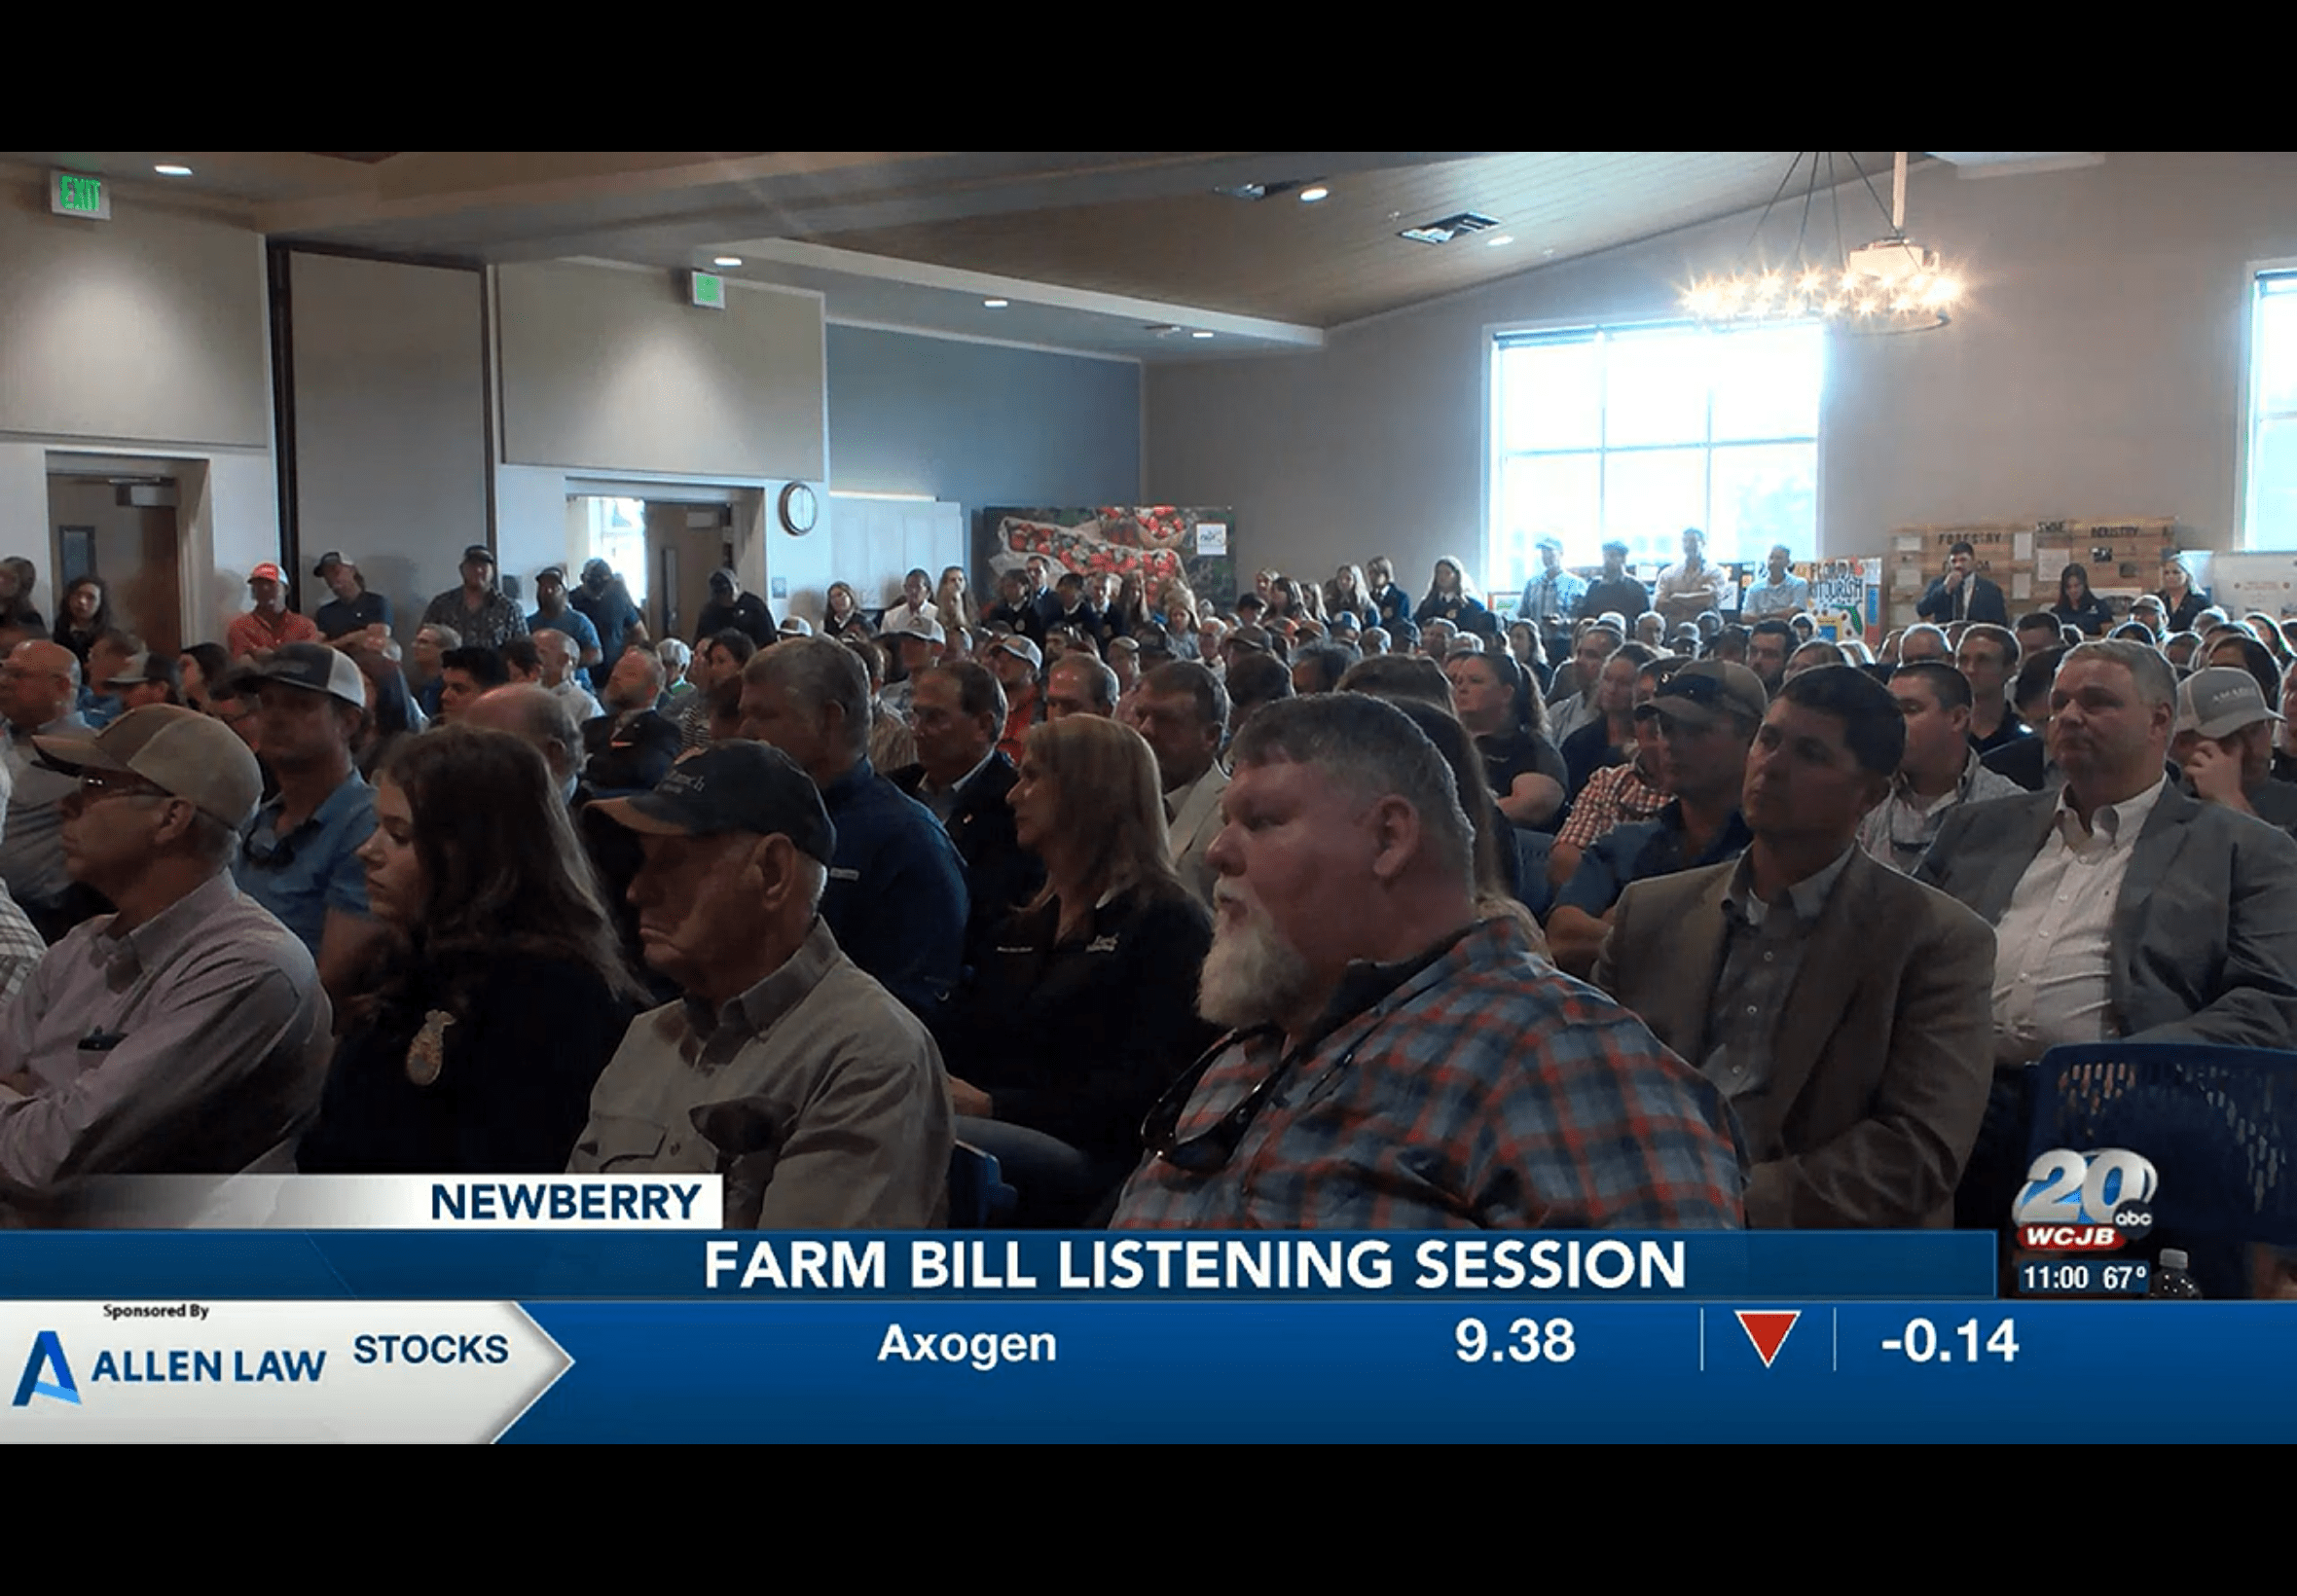 Farm bill listening session in Newberry